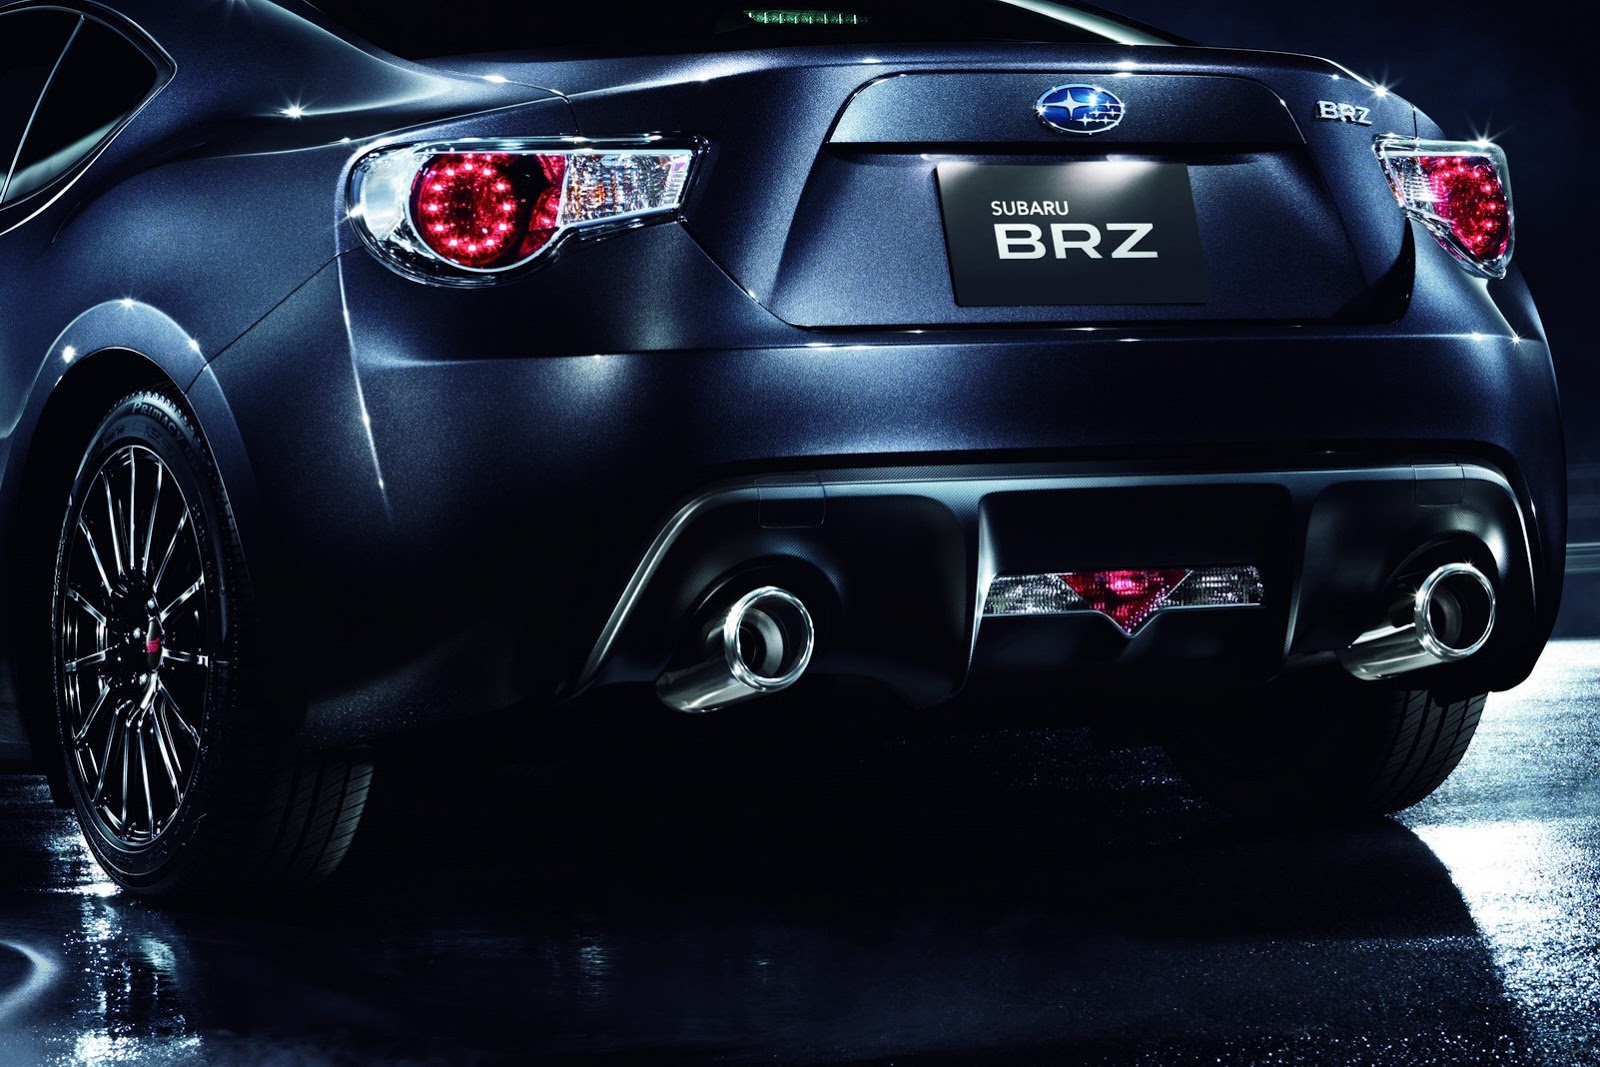  Subaru  BRZ  Premium Sports  diffuser AutonetMagz Review 